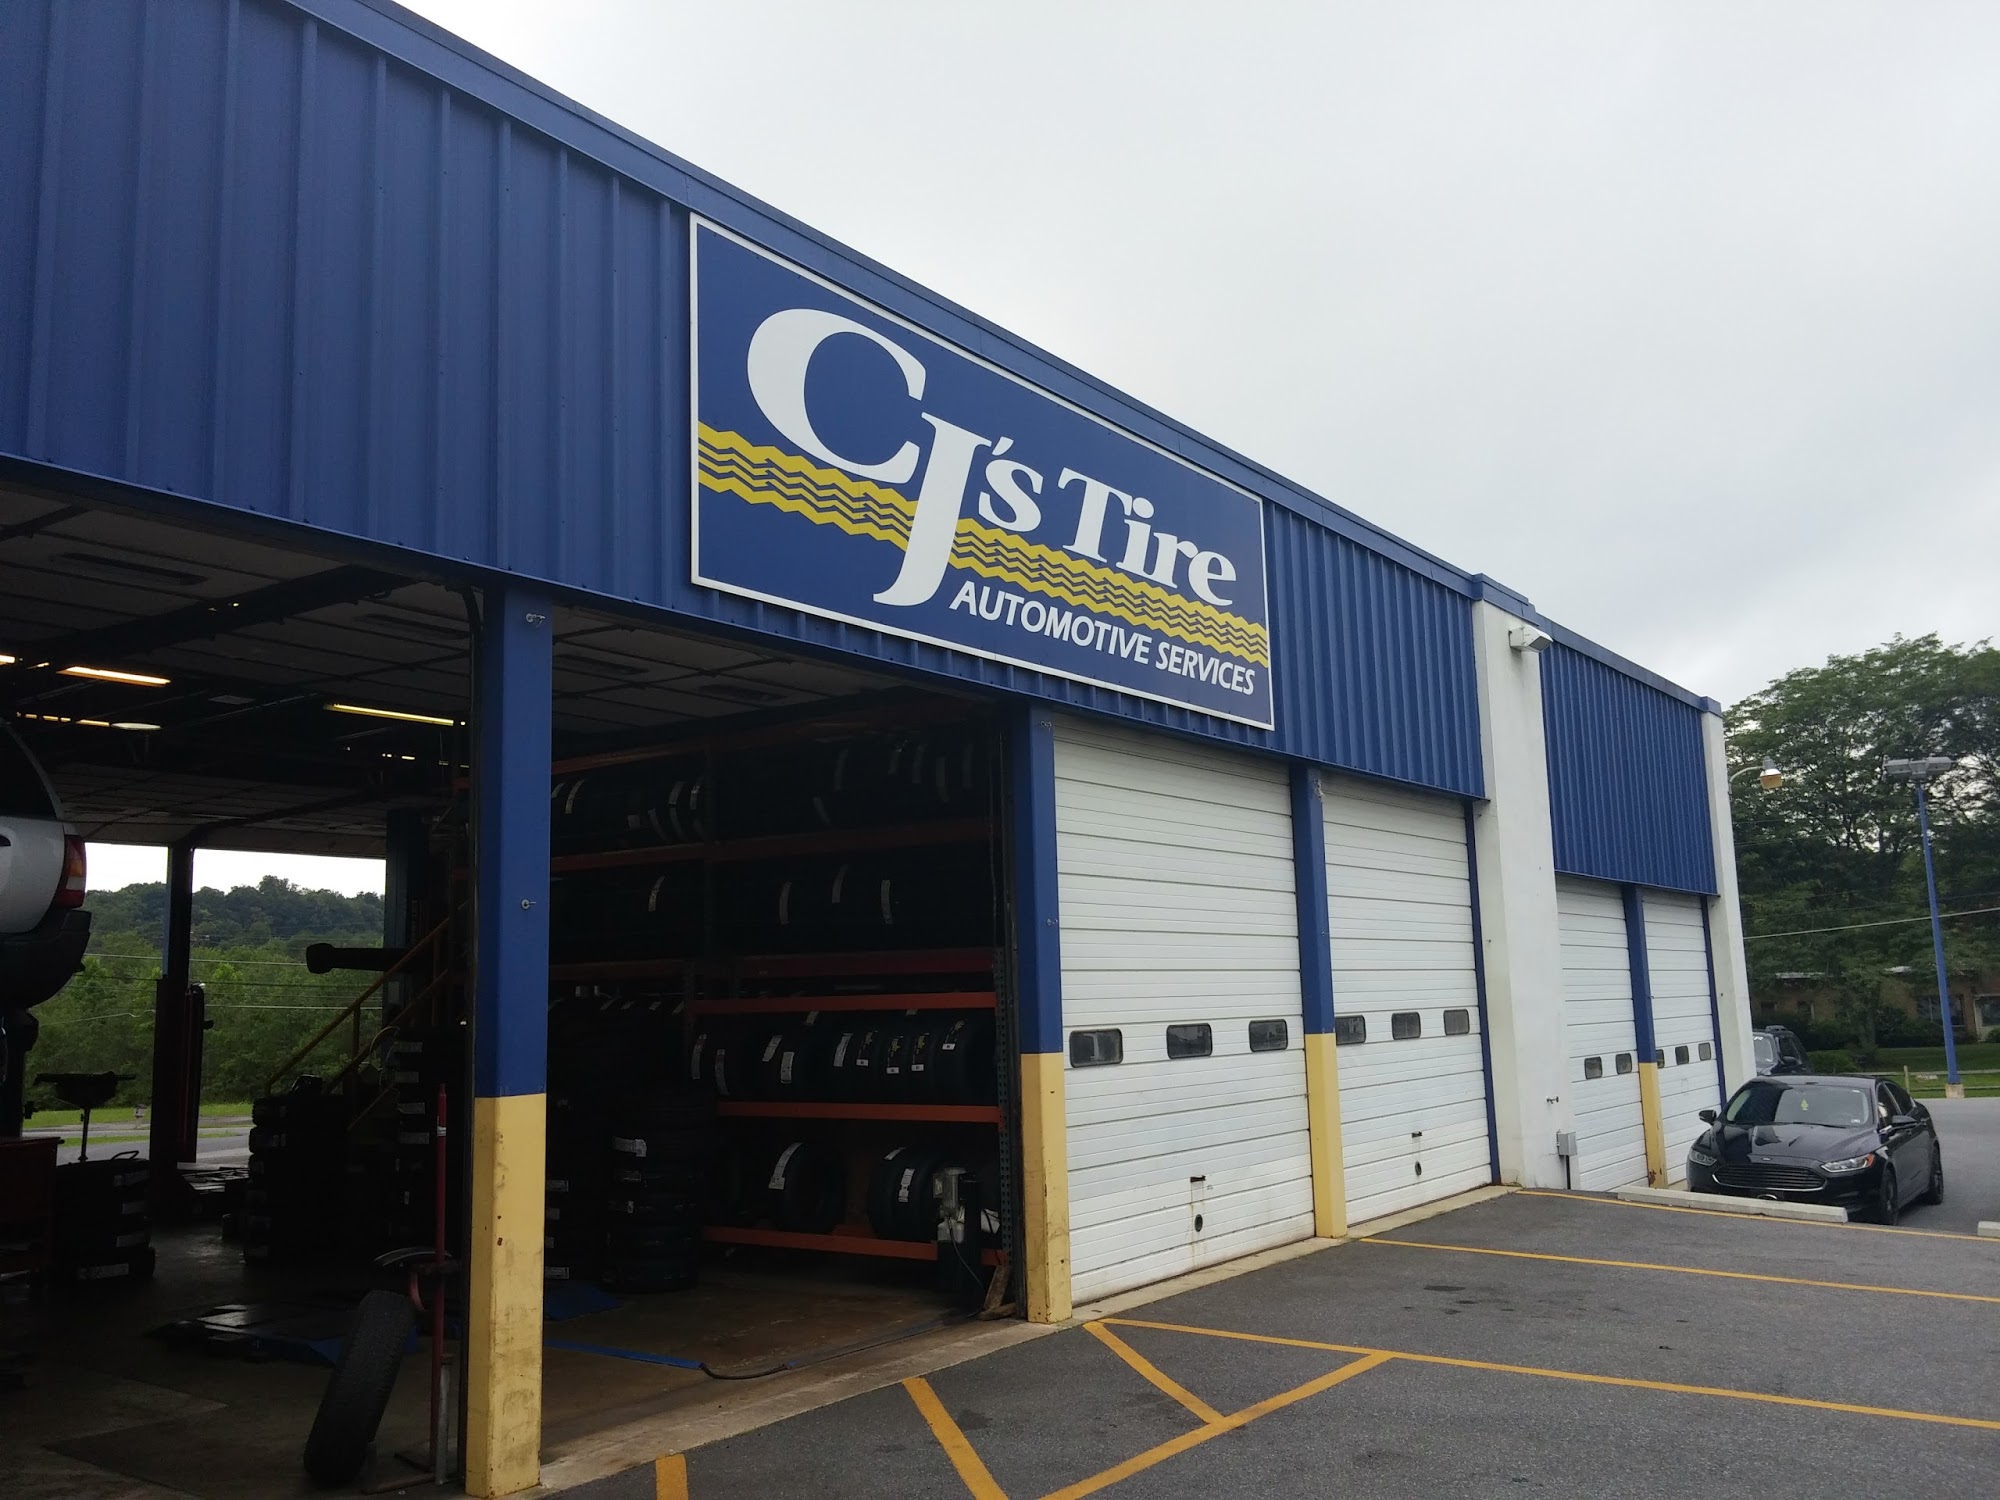 CJ's Tire & Automotive